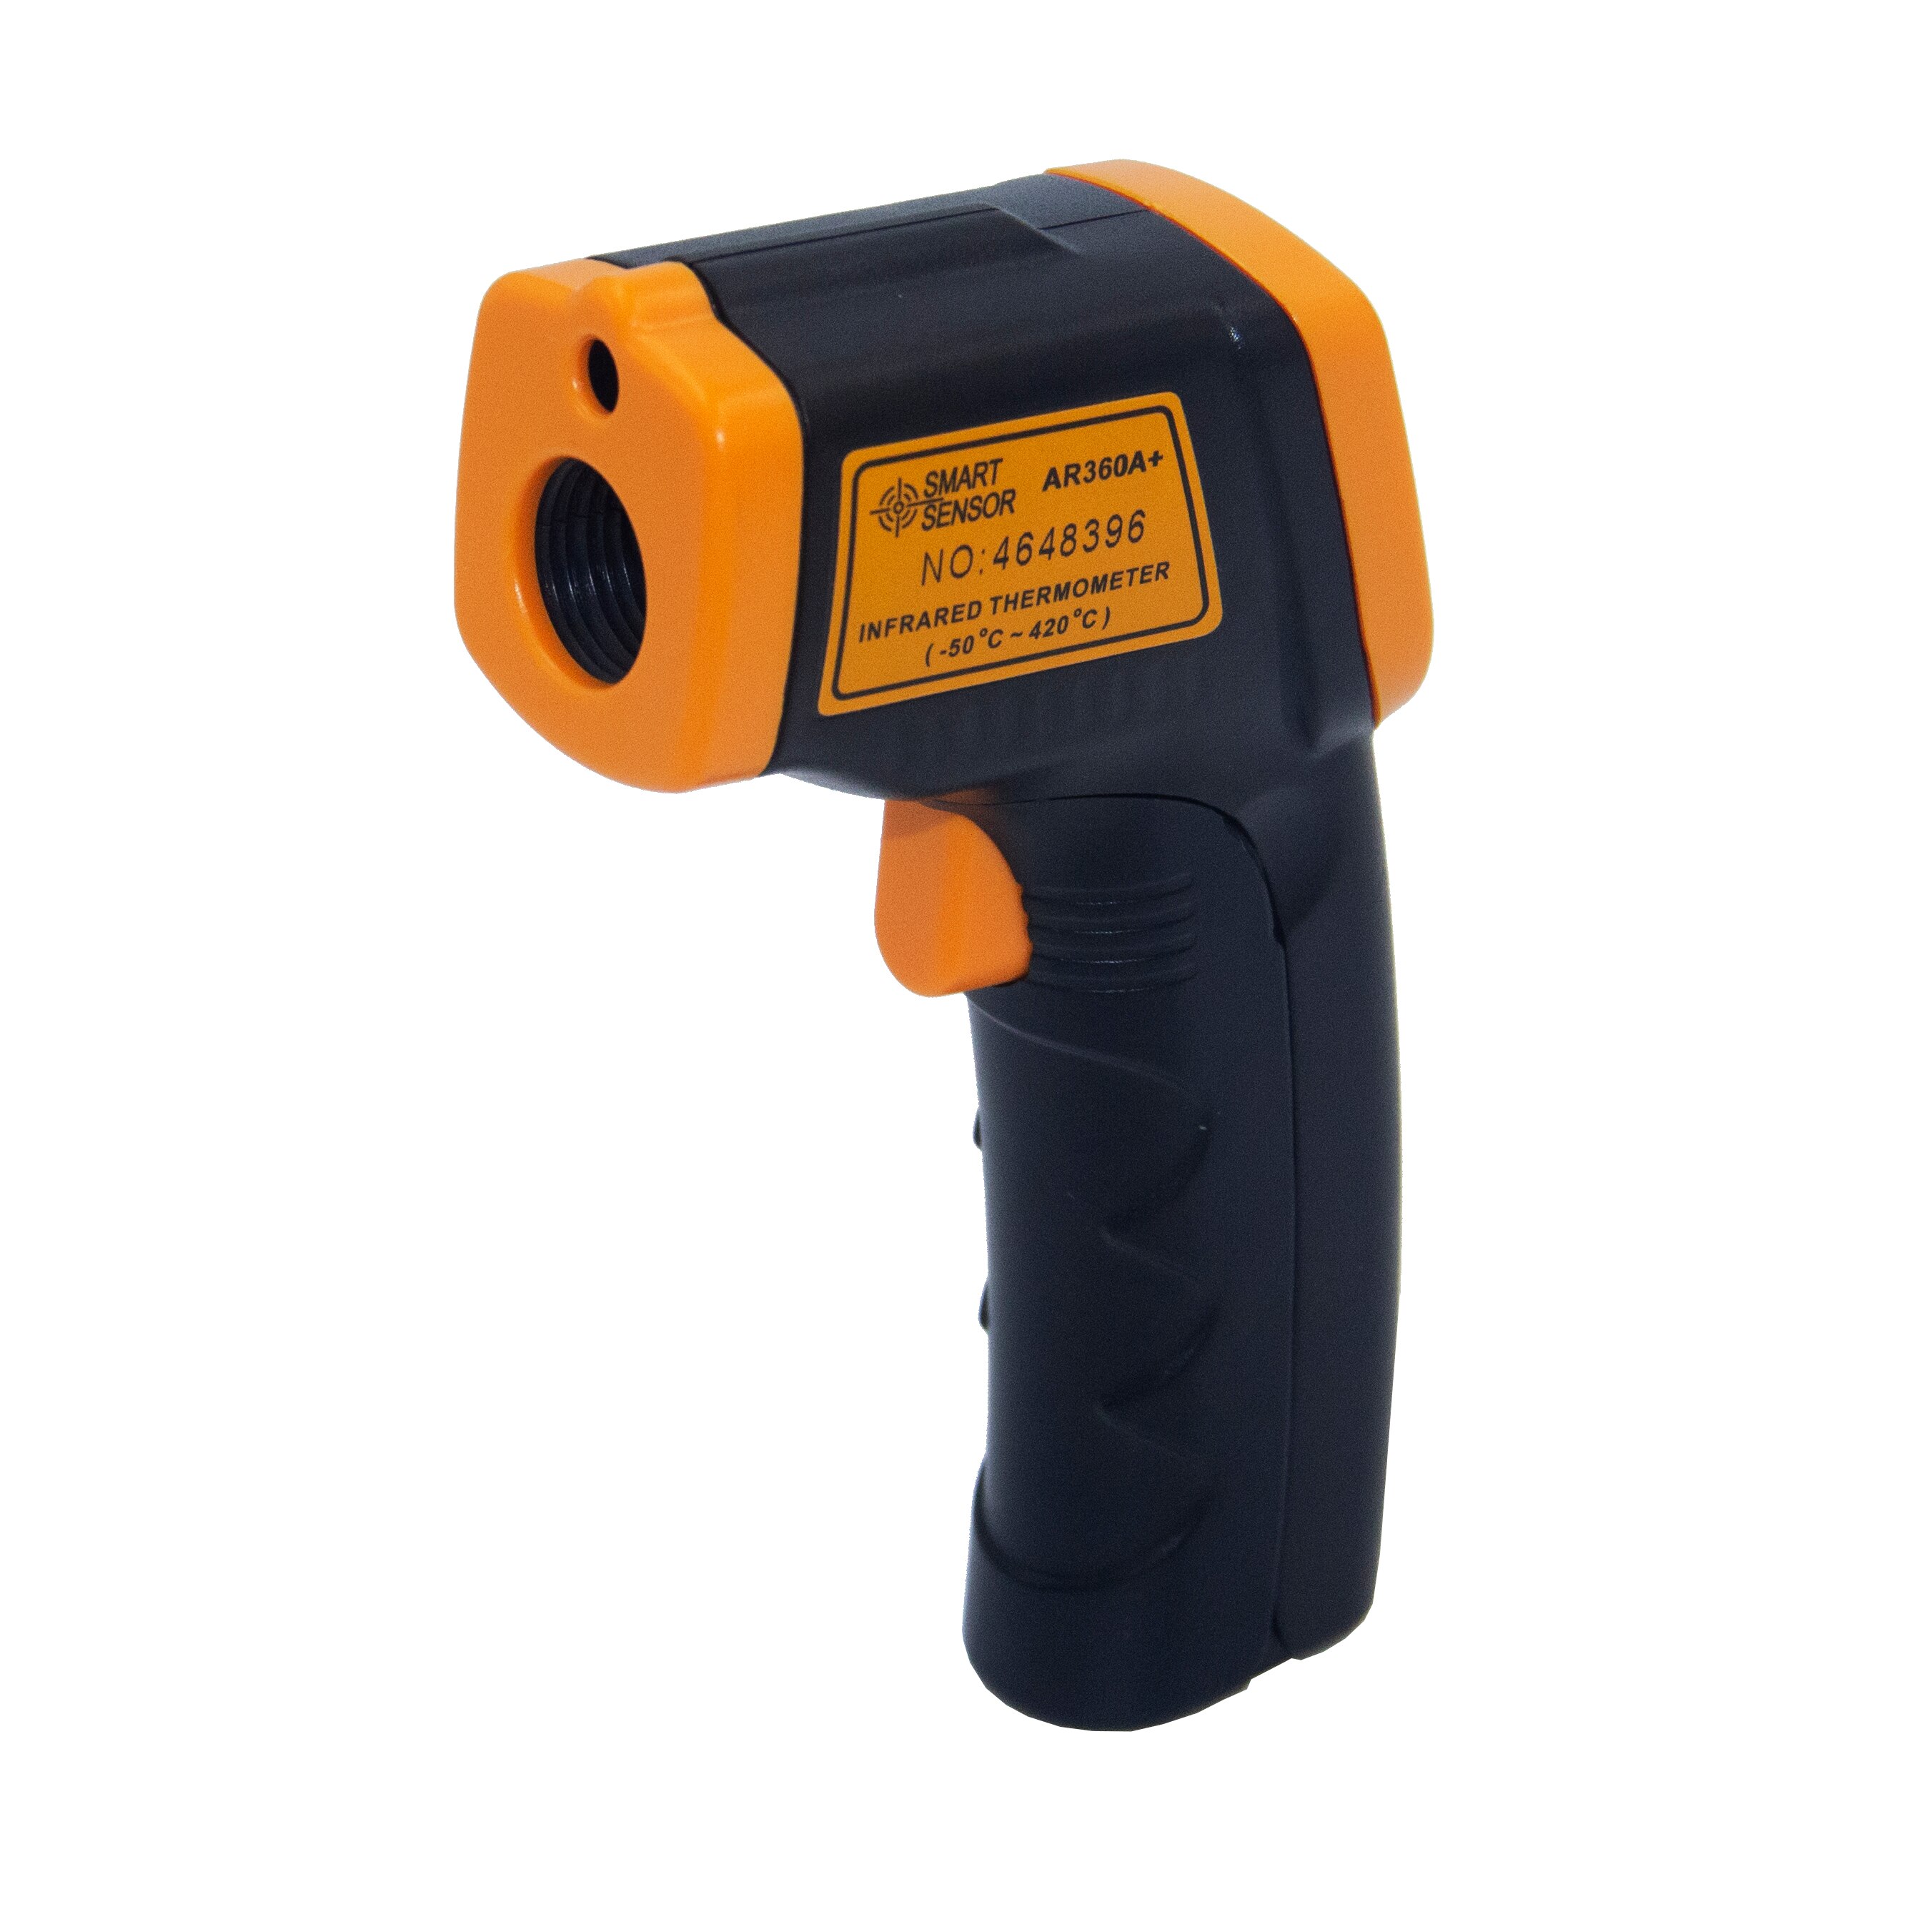 AR360A Industry Infrared Temperature Gun Non Contact Infrared Digital Temperature Gun Meter Termometer Термометр цифровой -50-420°C